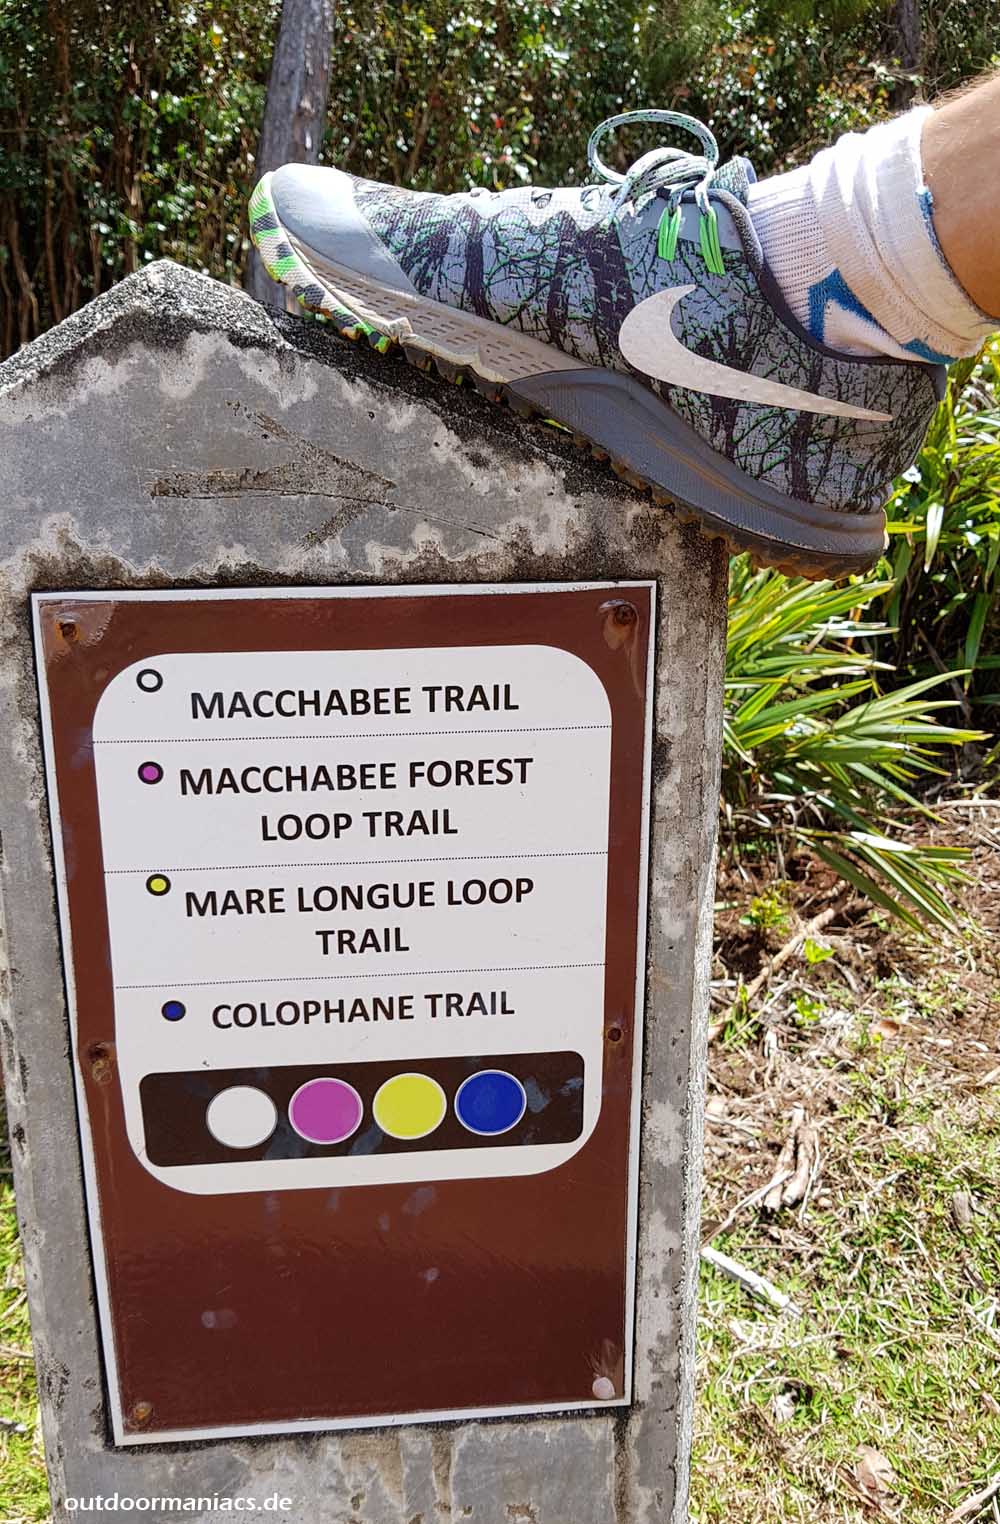 Trailrunning Mauritius Macchabee Trail